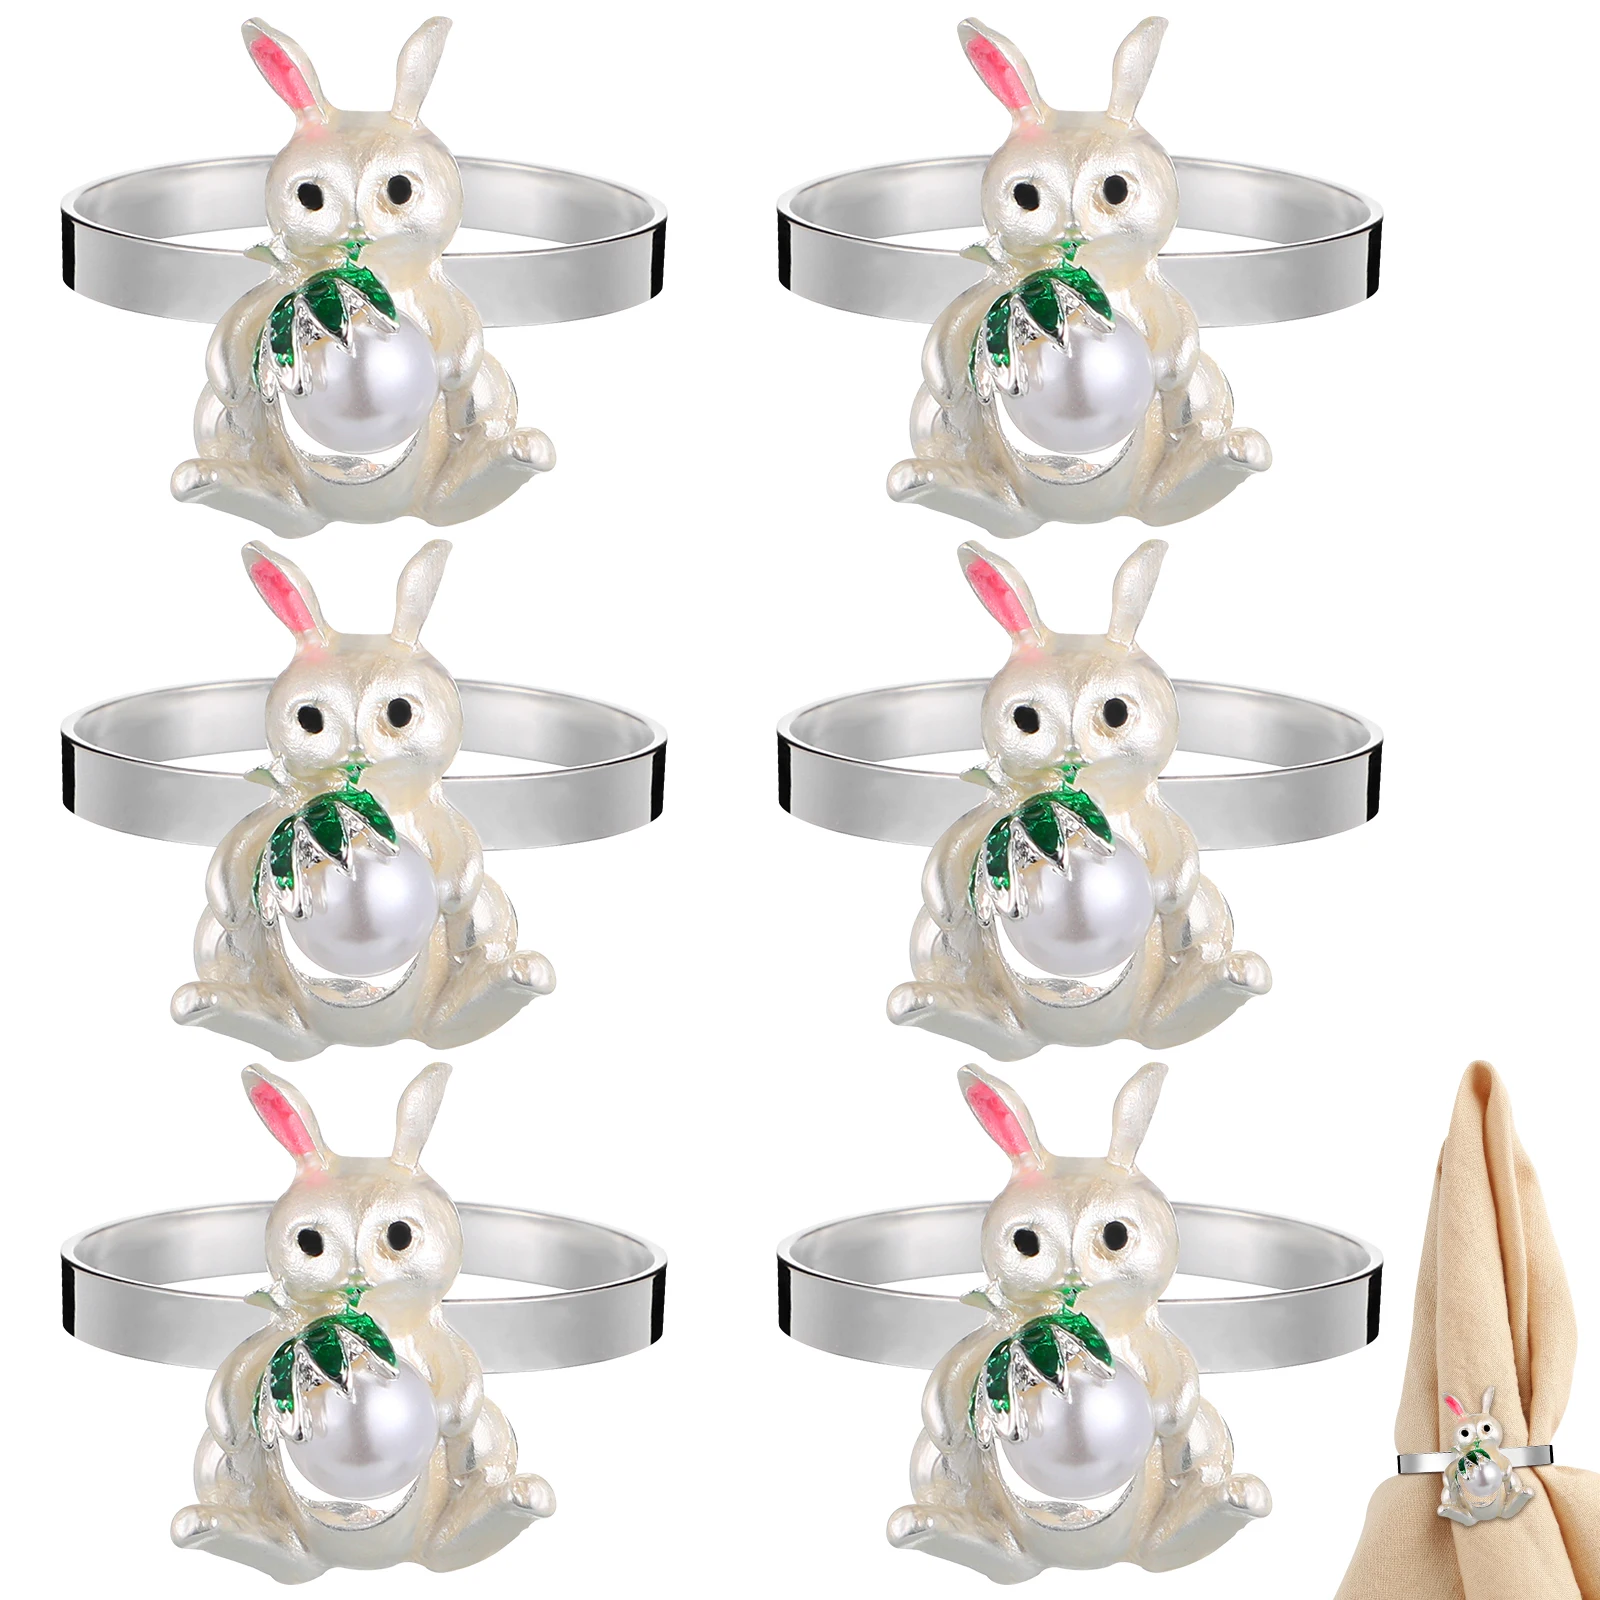 

6Pcs Reusable Adorable Cute Bunny Napkin Rings Enamel Rabbit Napkin Holder for Easter Dinner Weddings Party Table Decorations